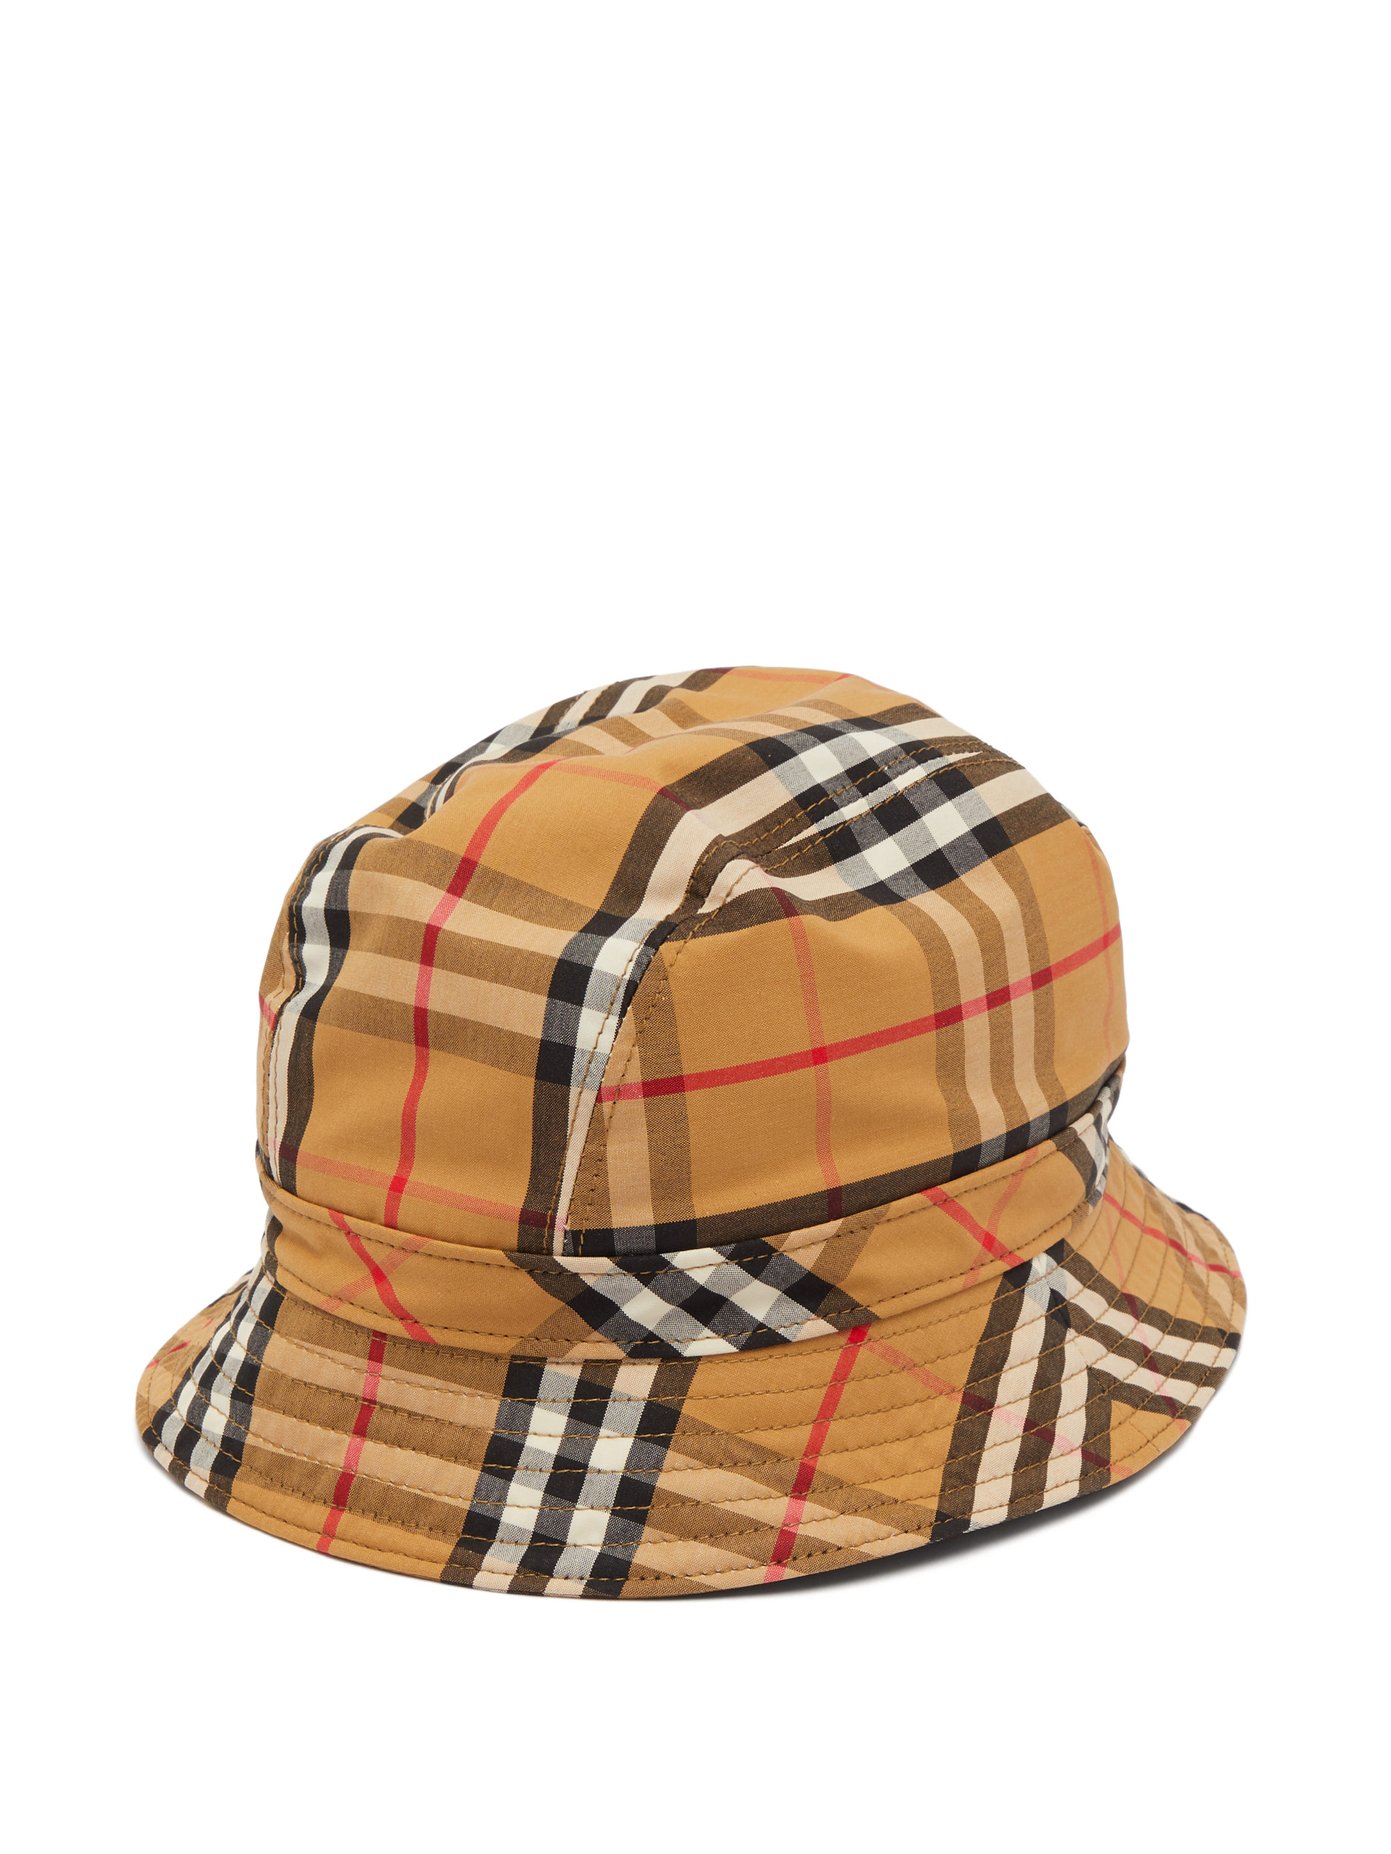 burberry mens hats sale